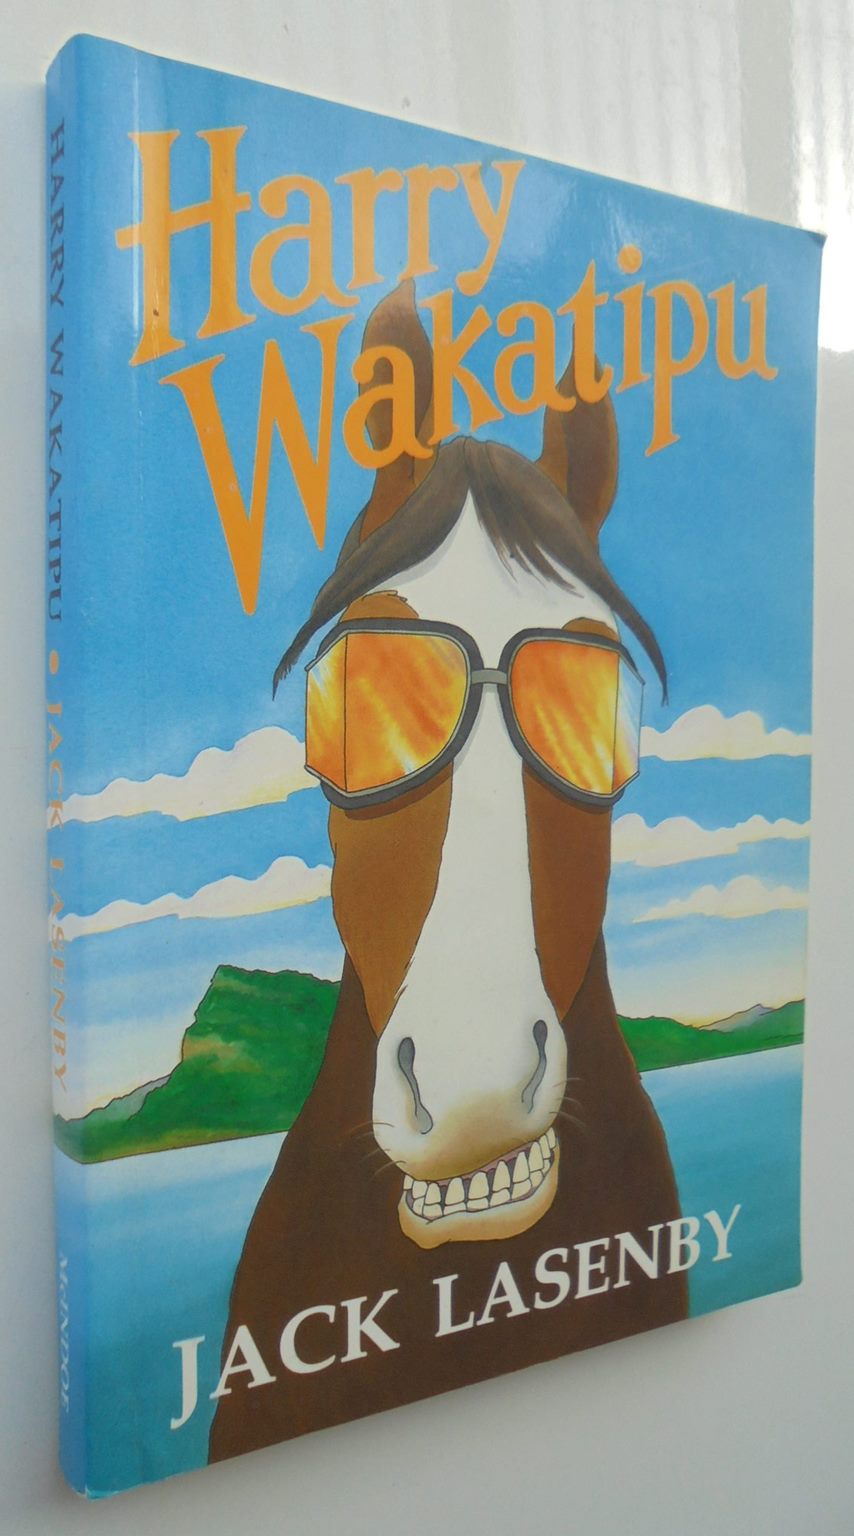 Harry Wakatipu By Jack Lasenby. VERY SCARCE.